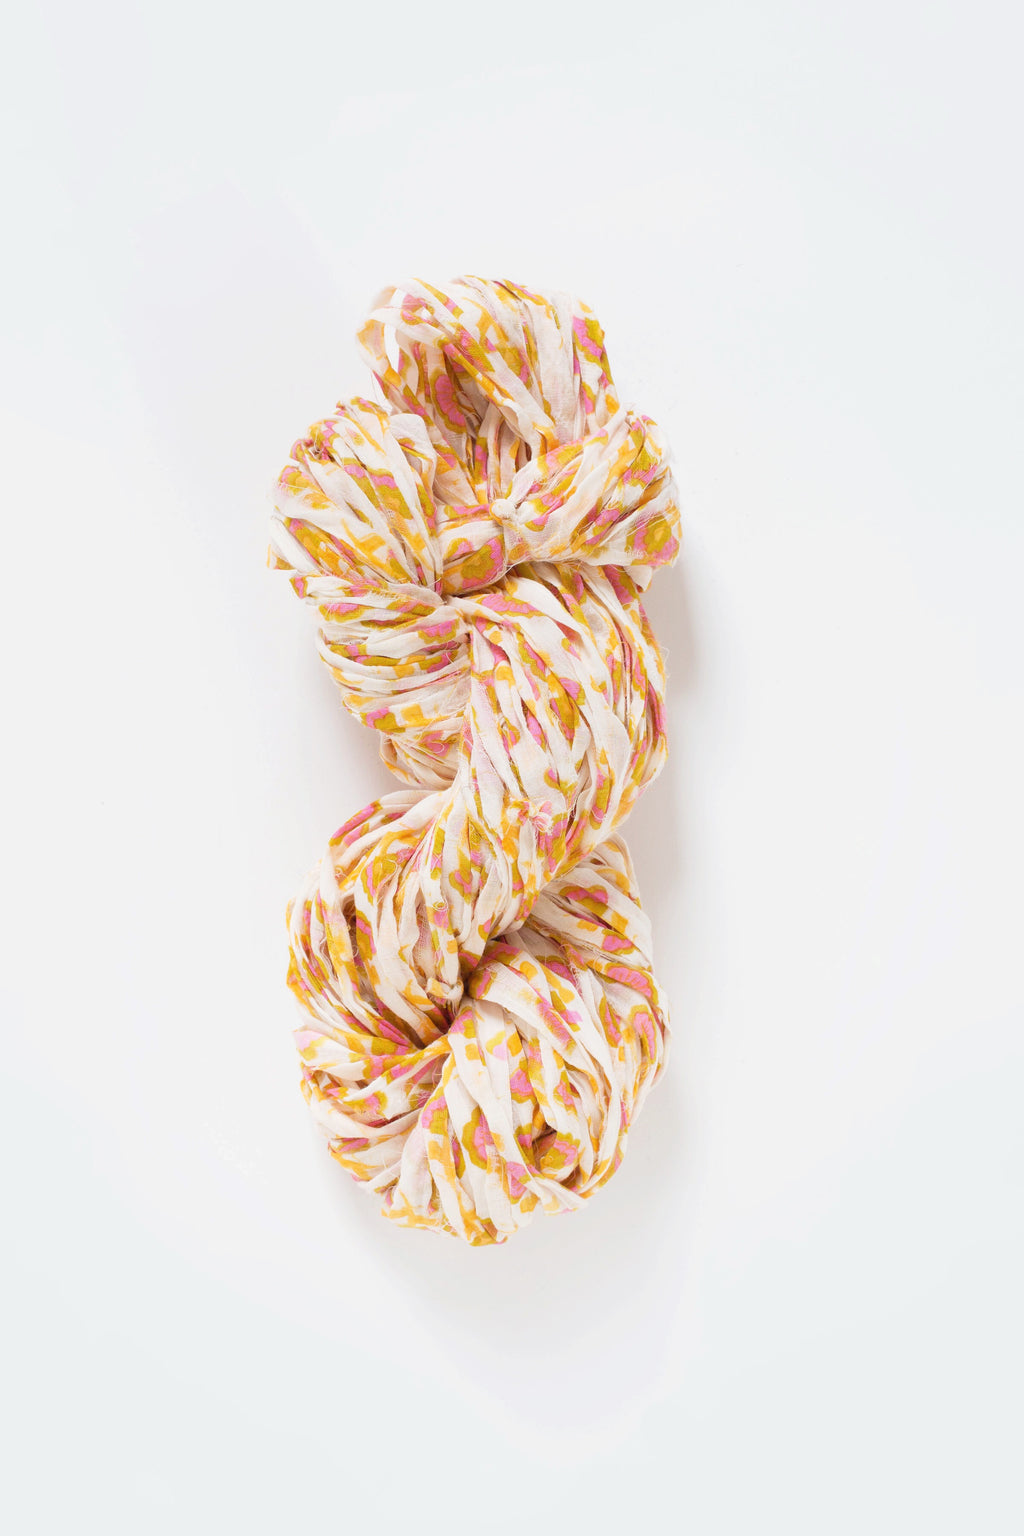 Knit Collage Wildflower Yarn in Ochre Rose - bulky, chunky cotton knitting yarn